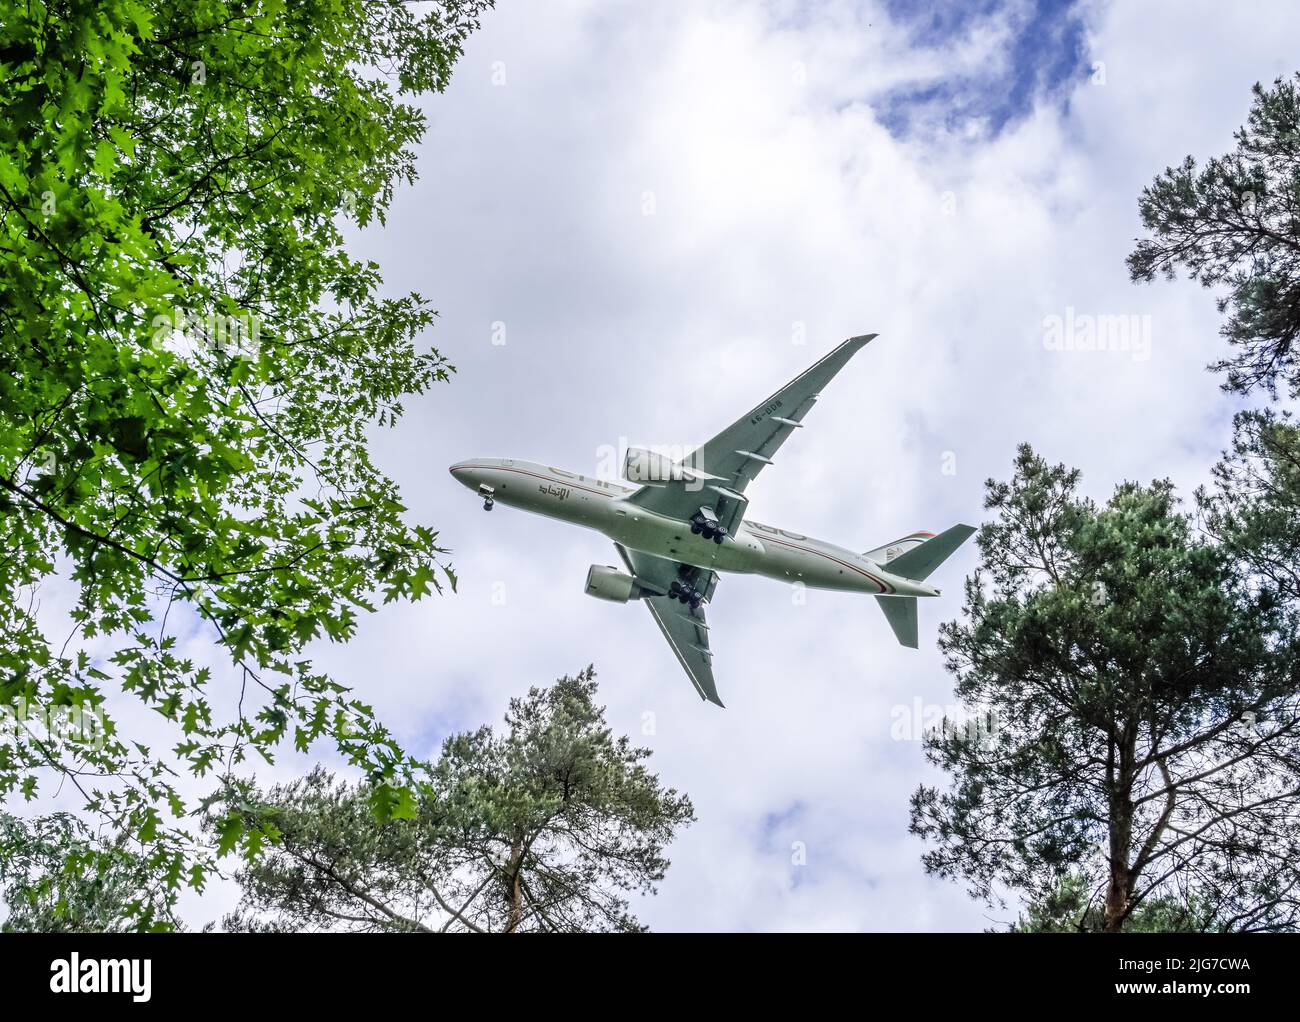 Aircraft, landing approach, city forest, Frankfurt am Main, Hesse, Germany Stock Photo